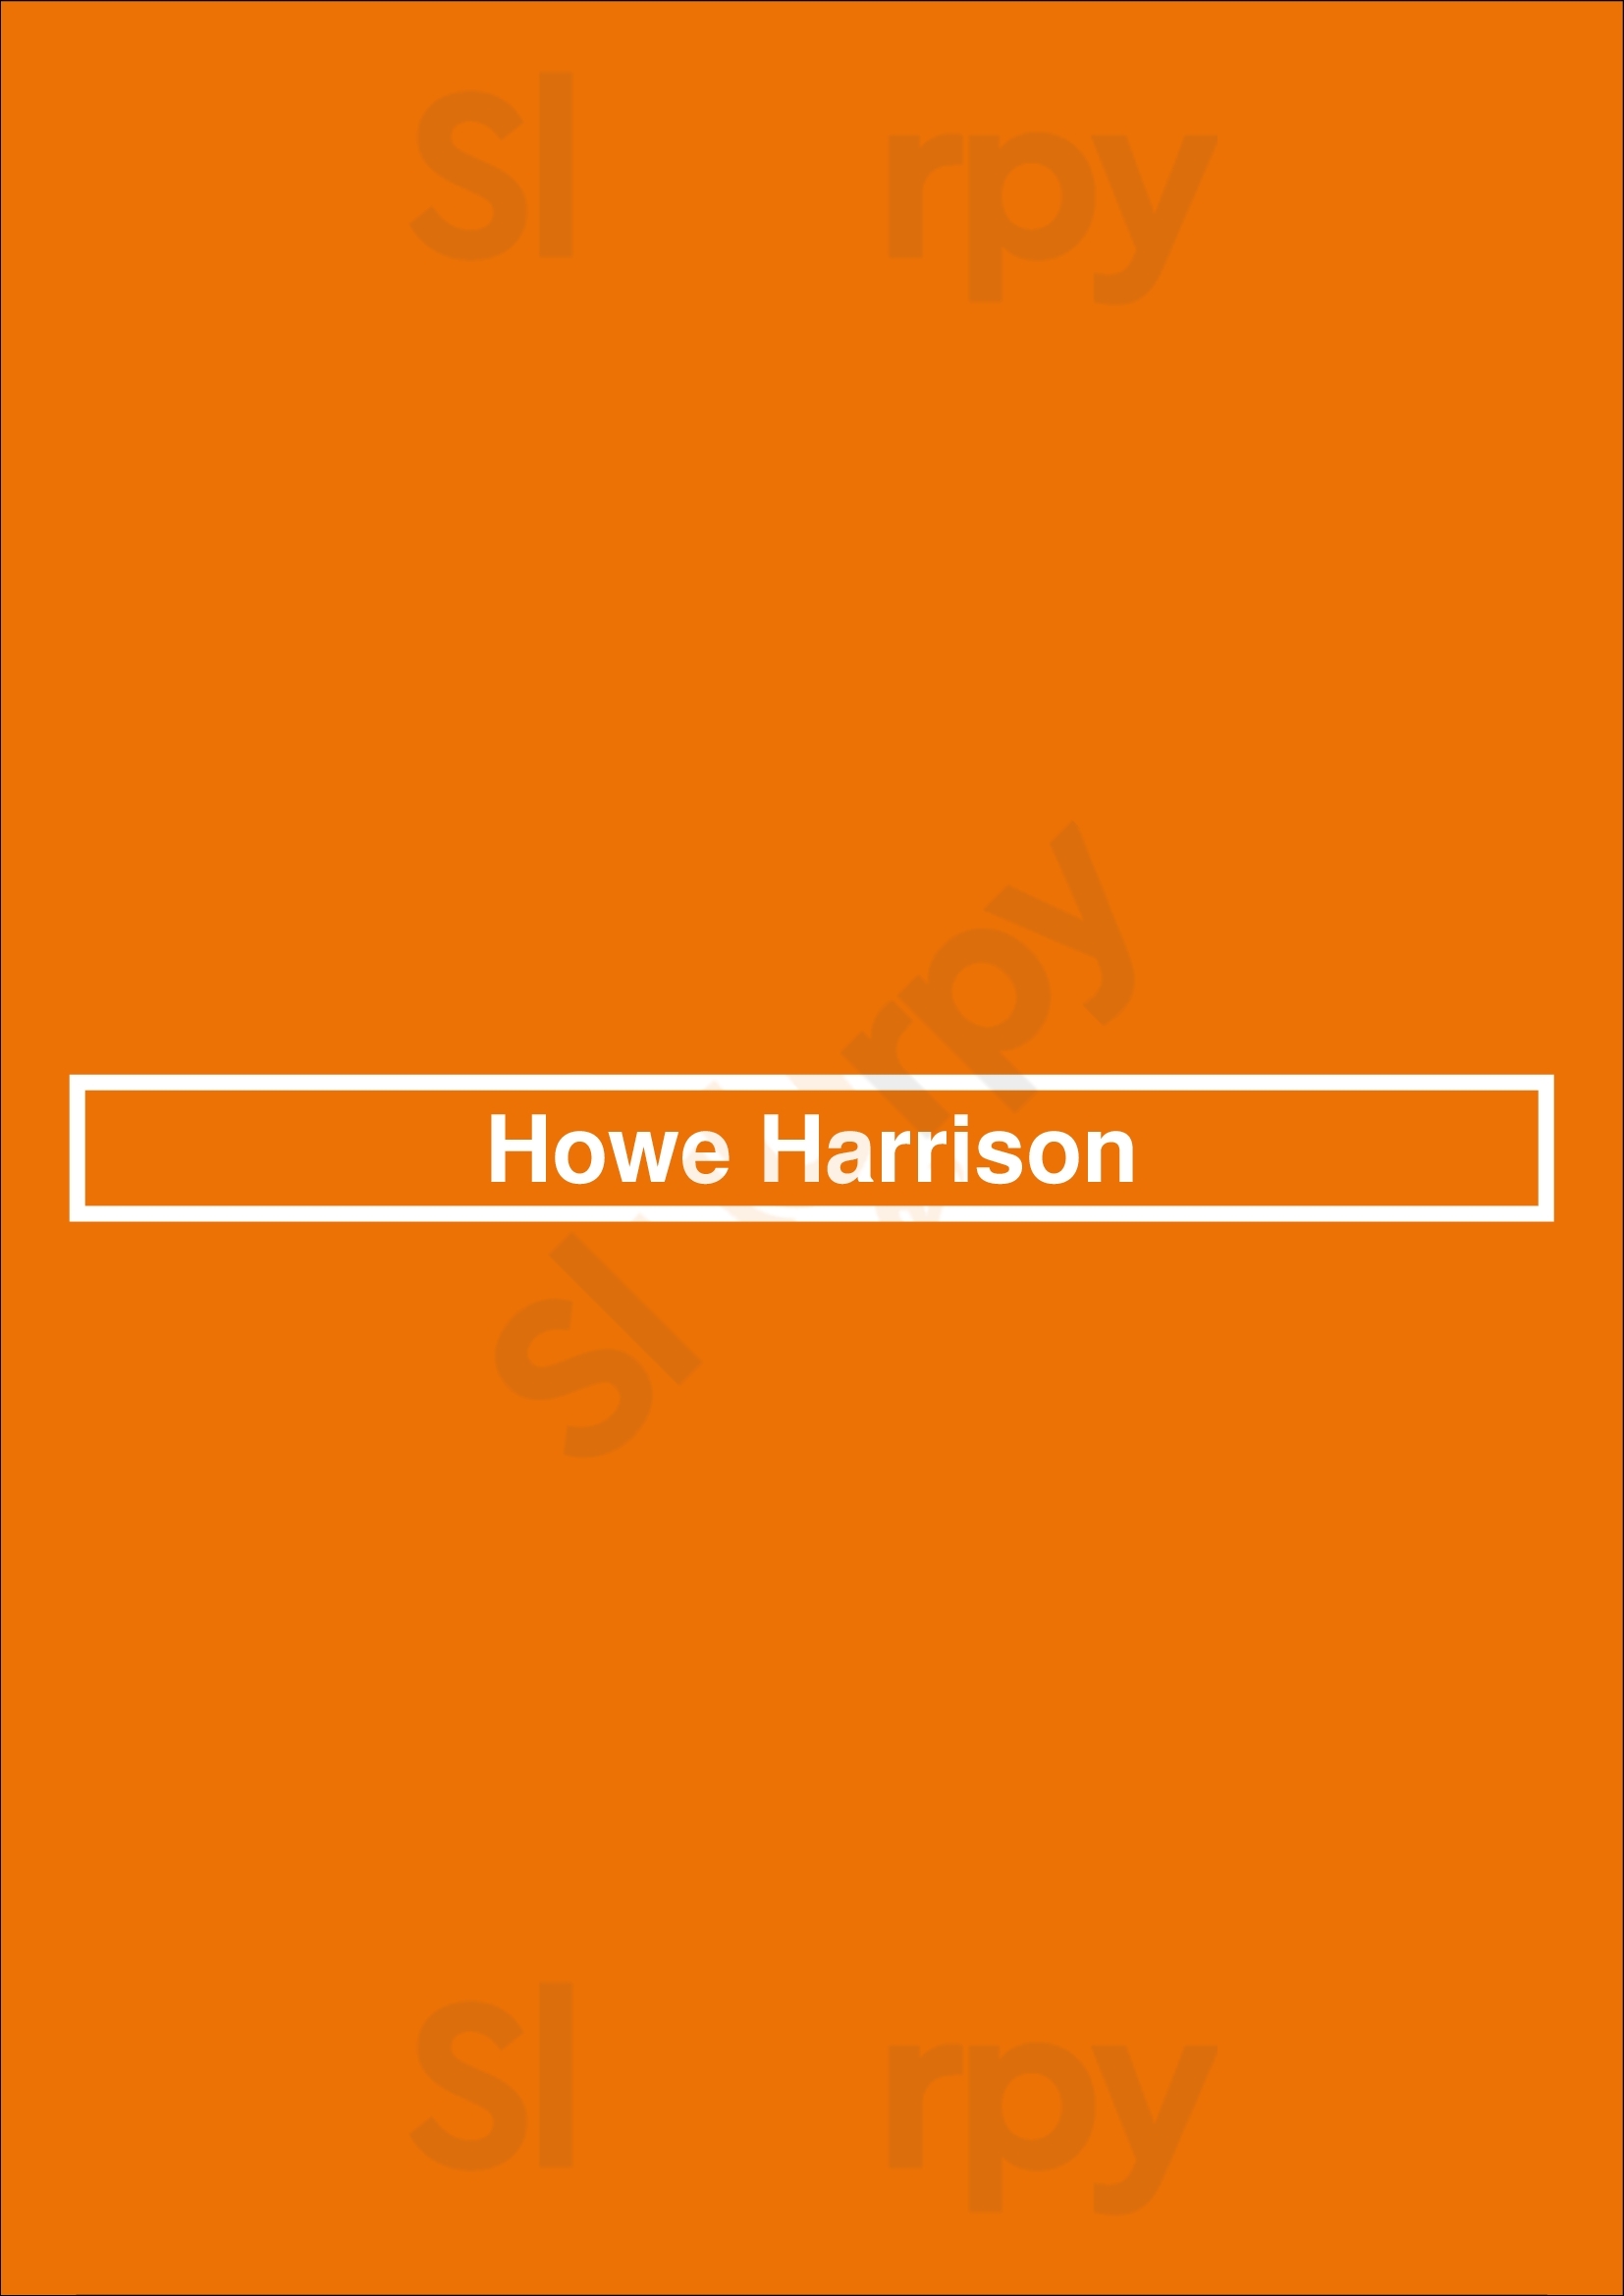 Howe Harrison Huddersfield Menu - 1